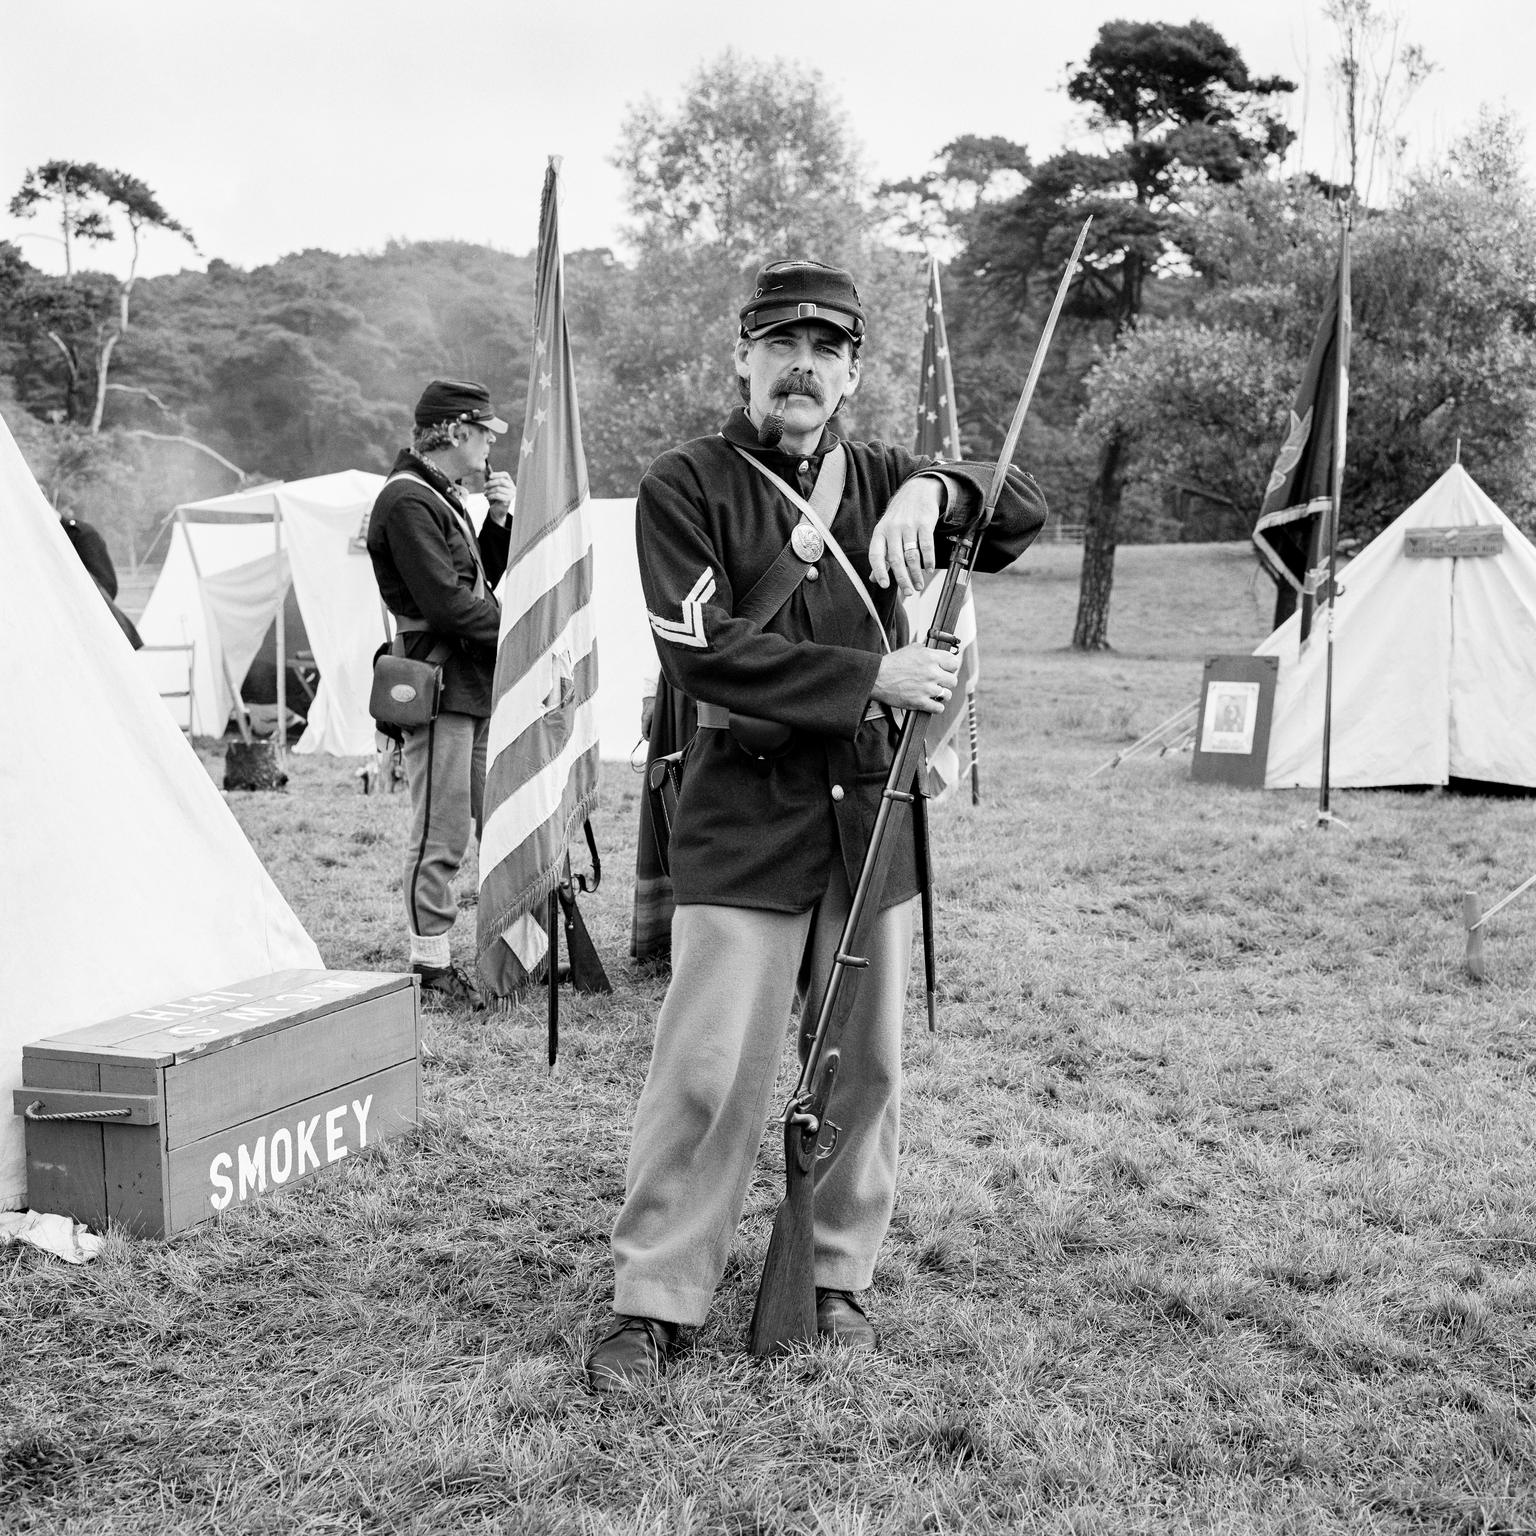 Chris Blanchett American Civil War re-enactment society. Margam Park, Wales